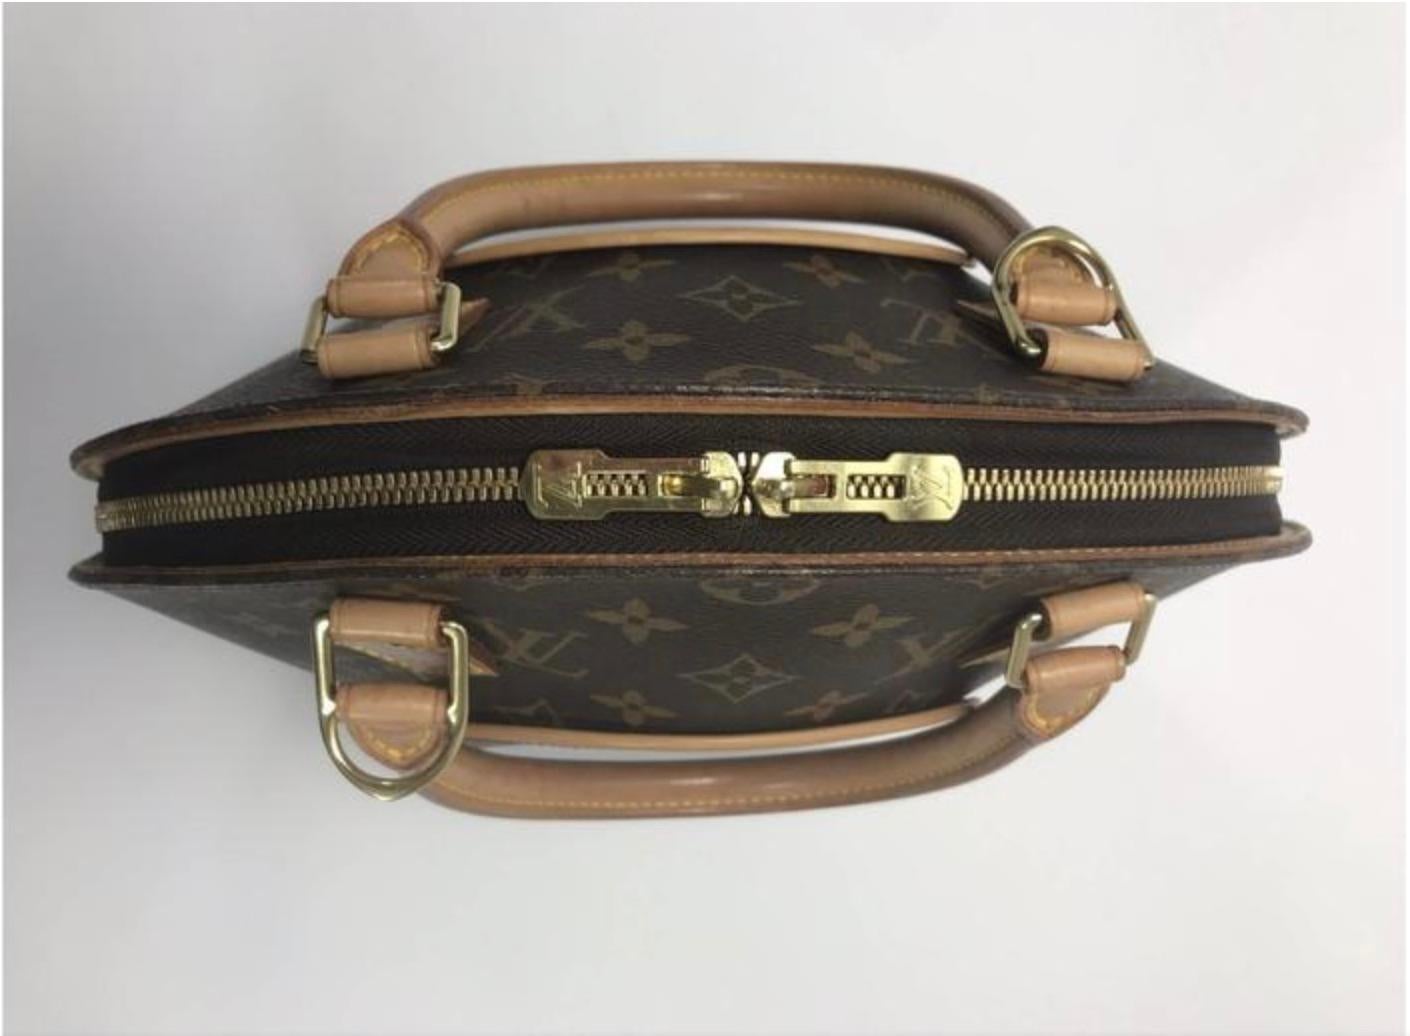 Louis Vuitton Monogram Ellipse PM Satchel Top Handle Handbag In Good Condition For Sale In Saint Charles, IL